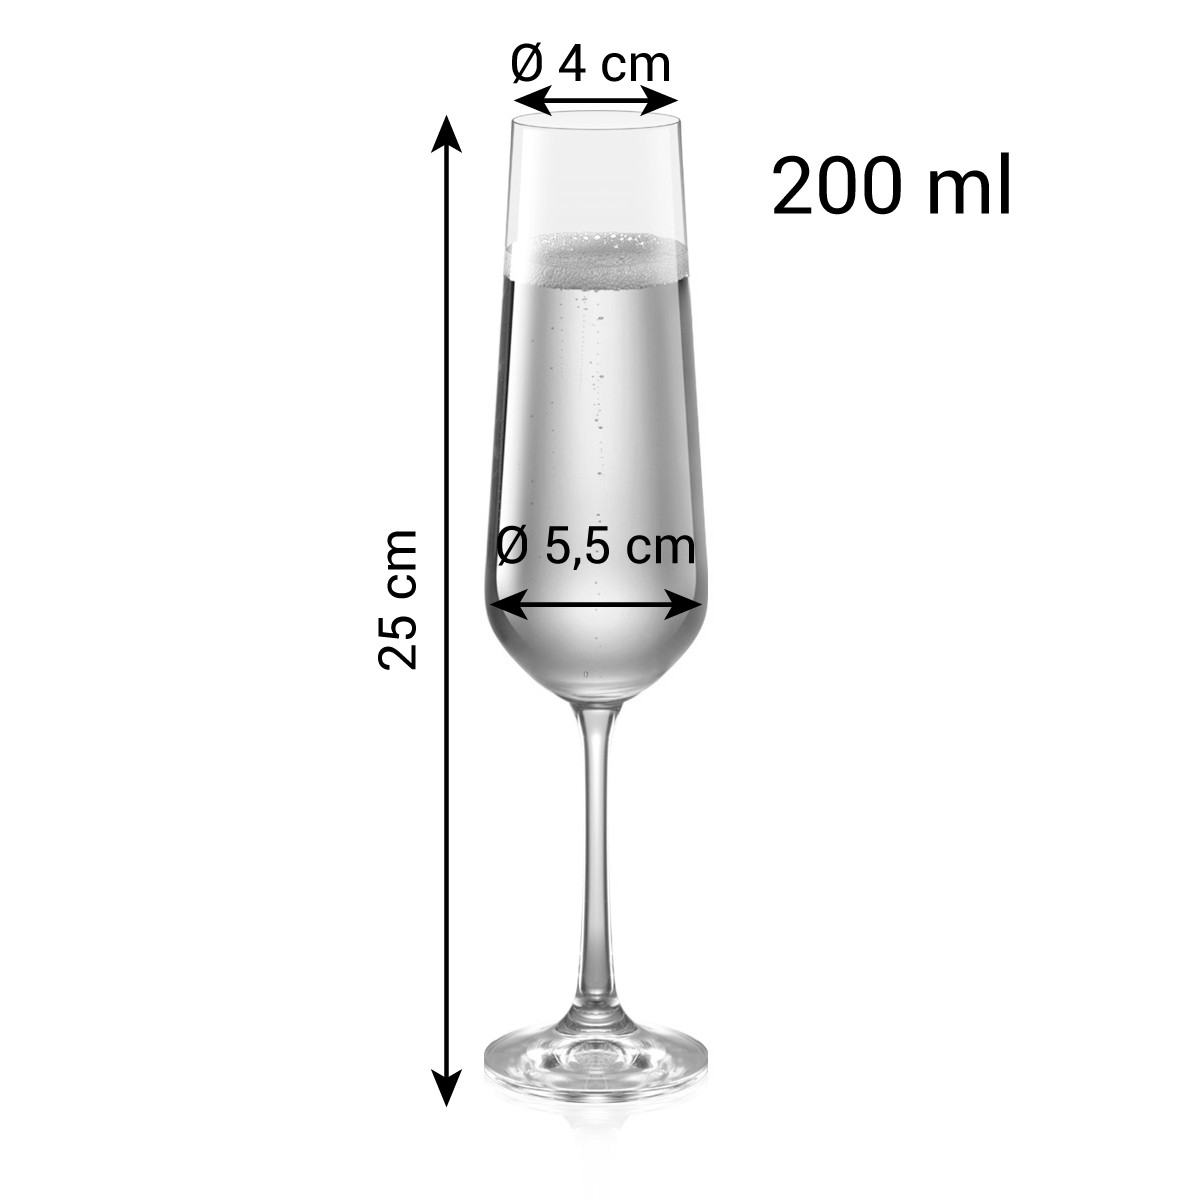 Kieliszki do szampana GIORGIO 200 ml, 6 szt.